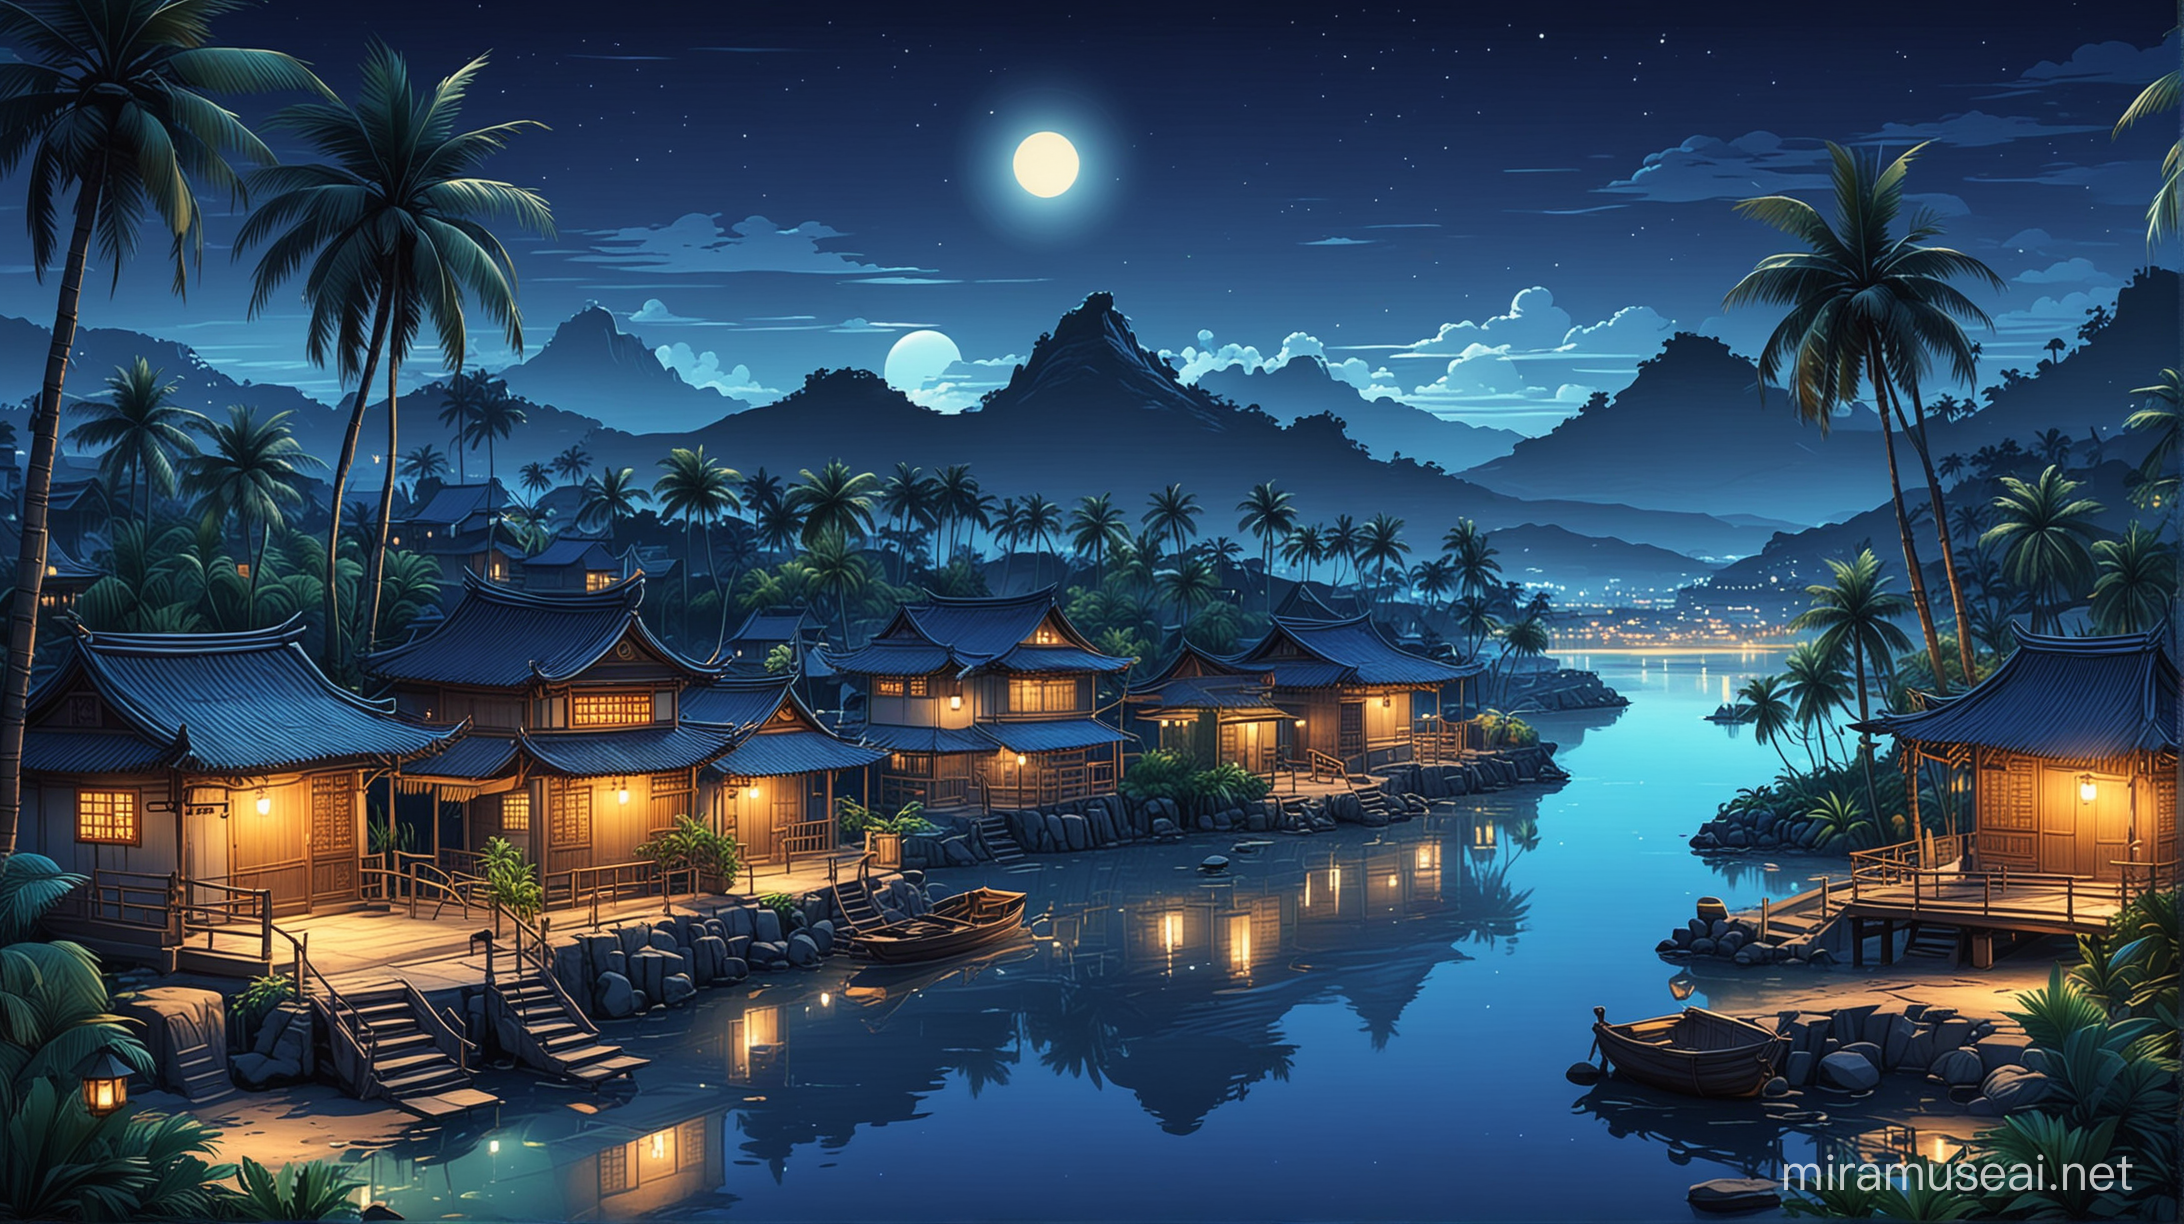 night blue cartoon asian village with palm trees 